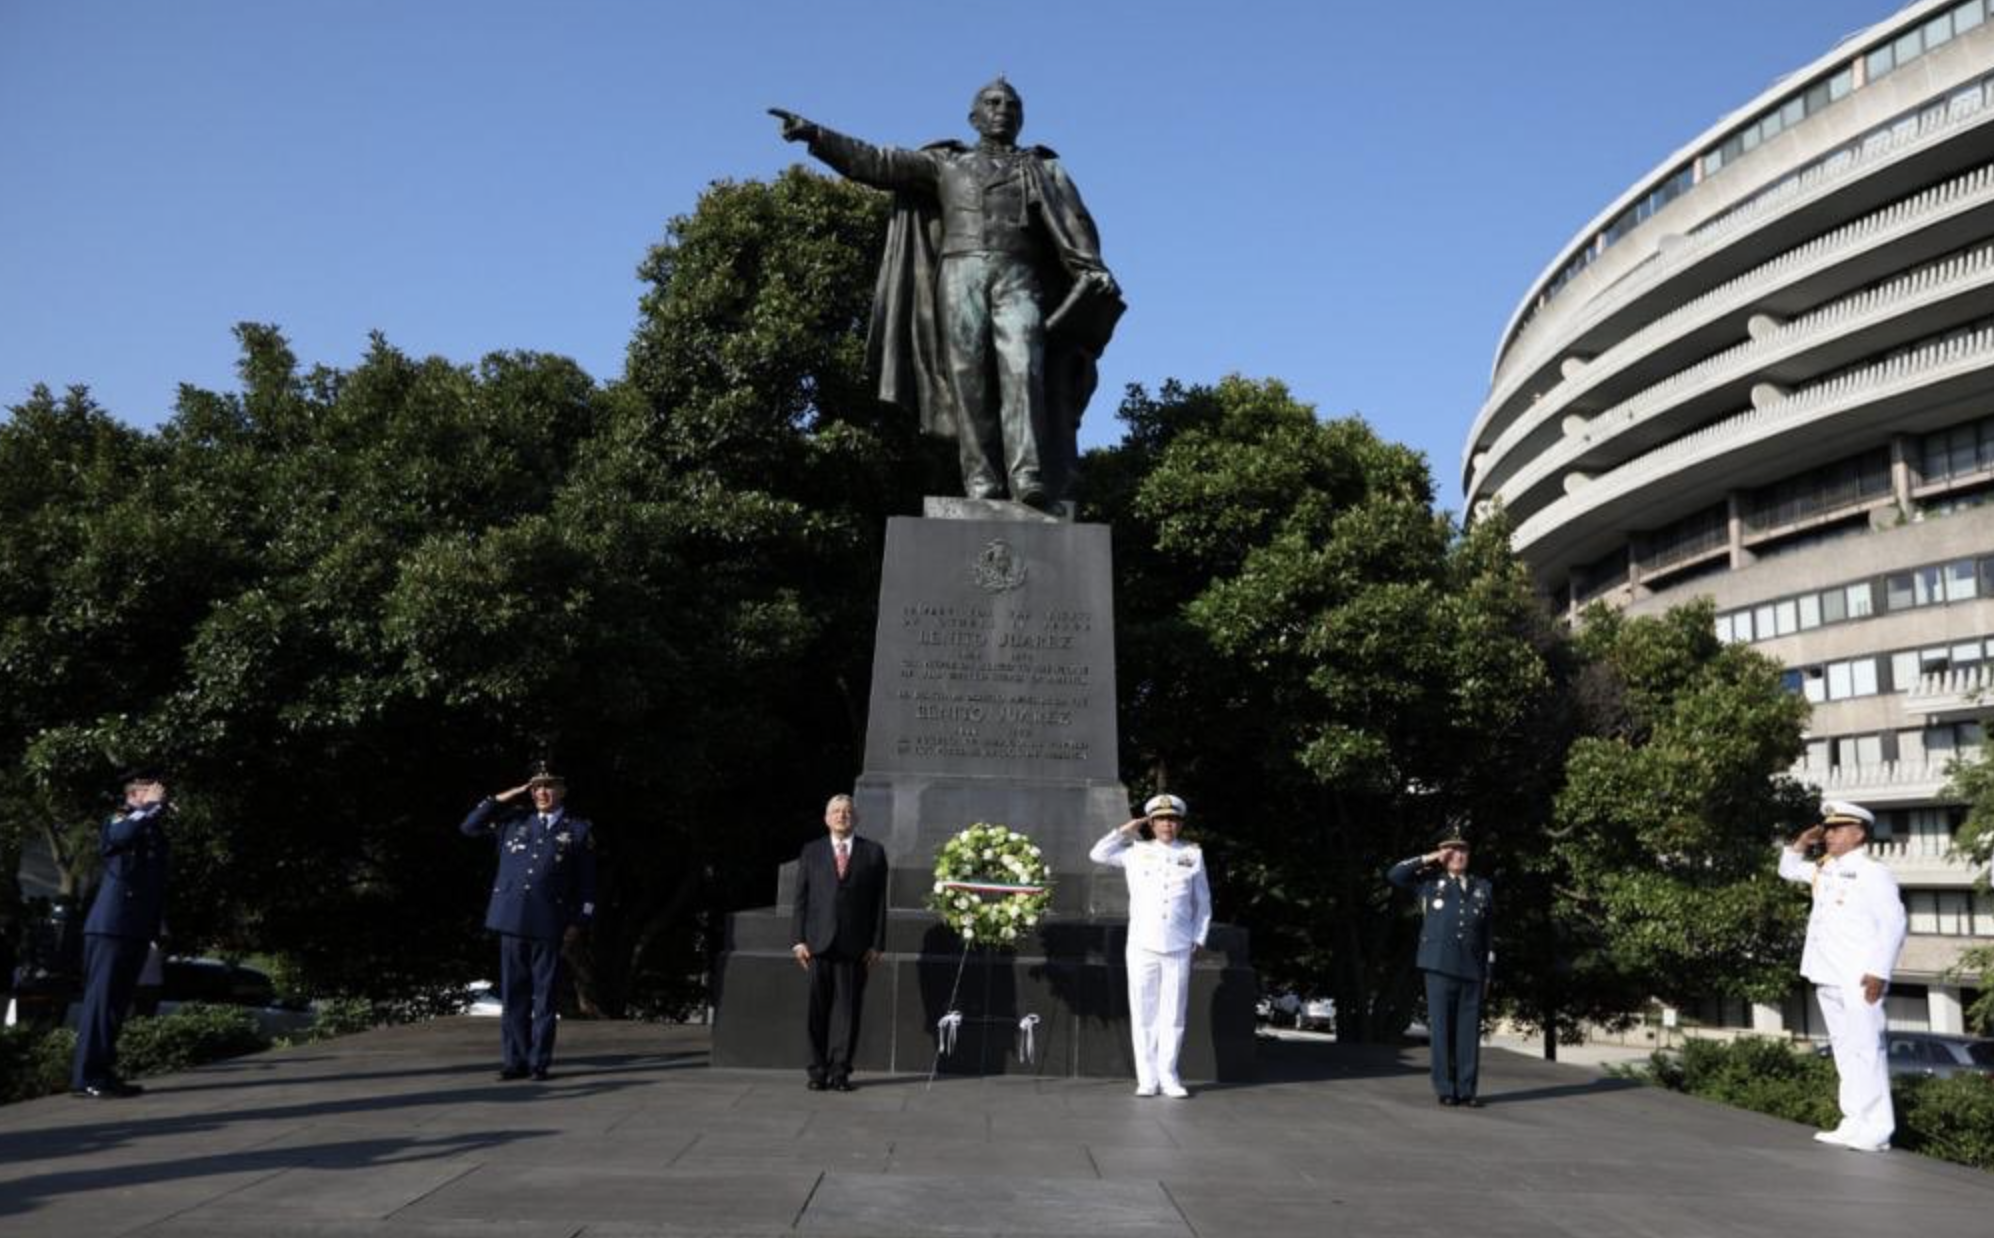 Mexican military and President visit Benito Juarez Memorial